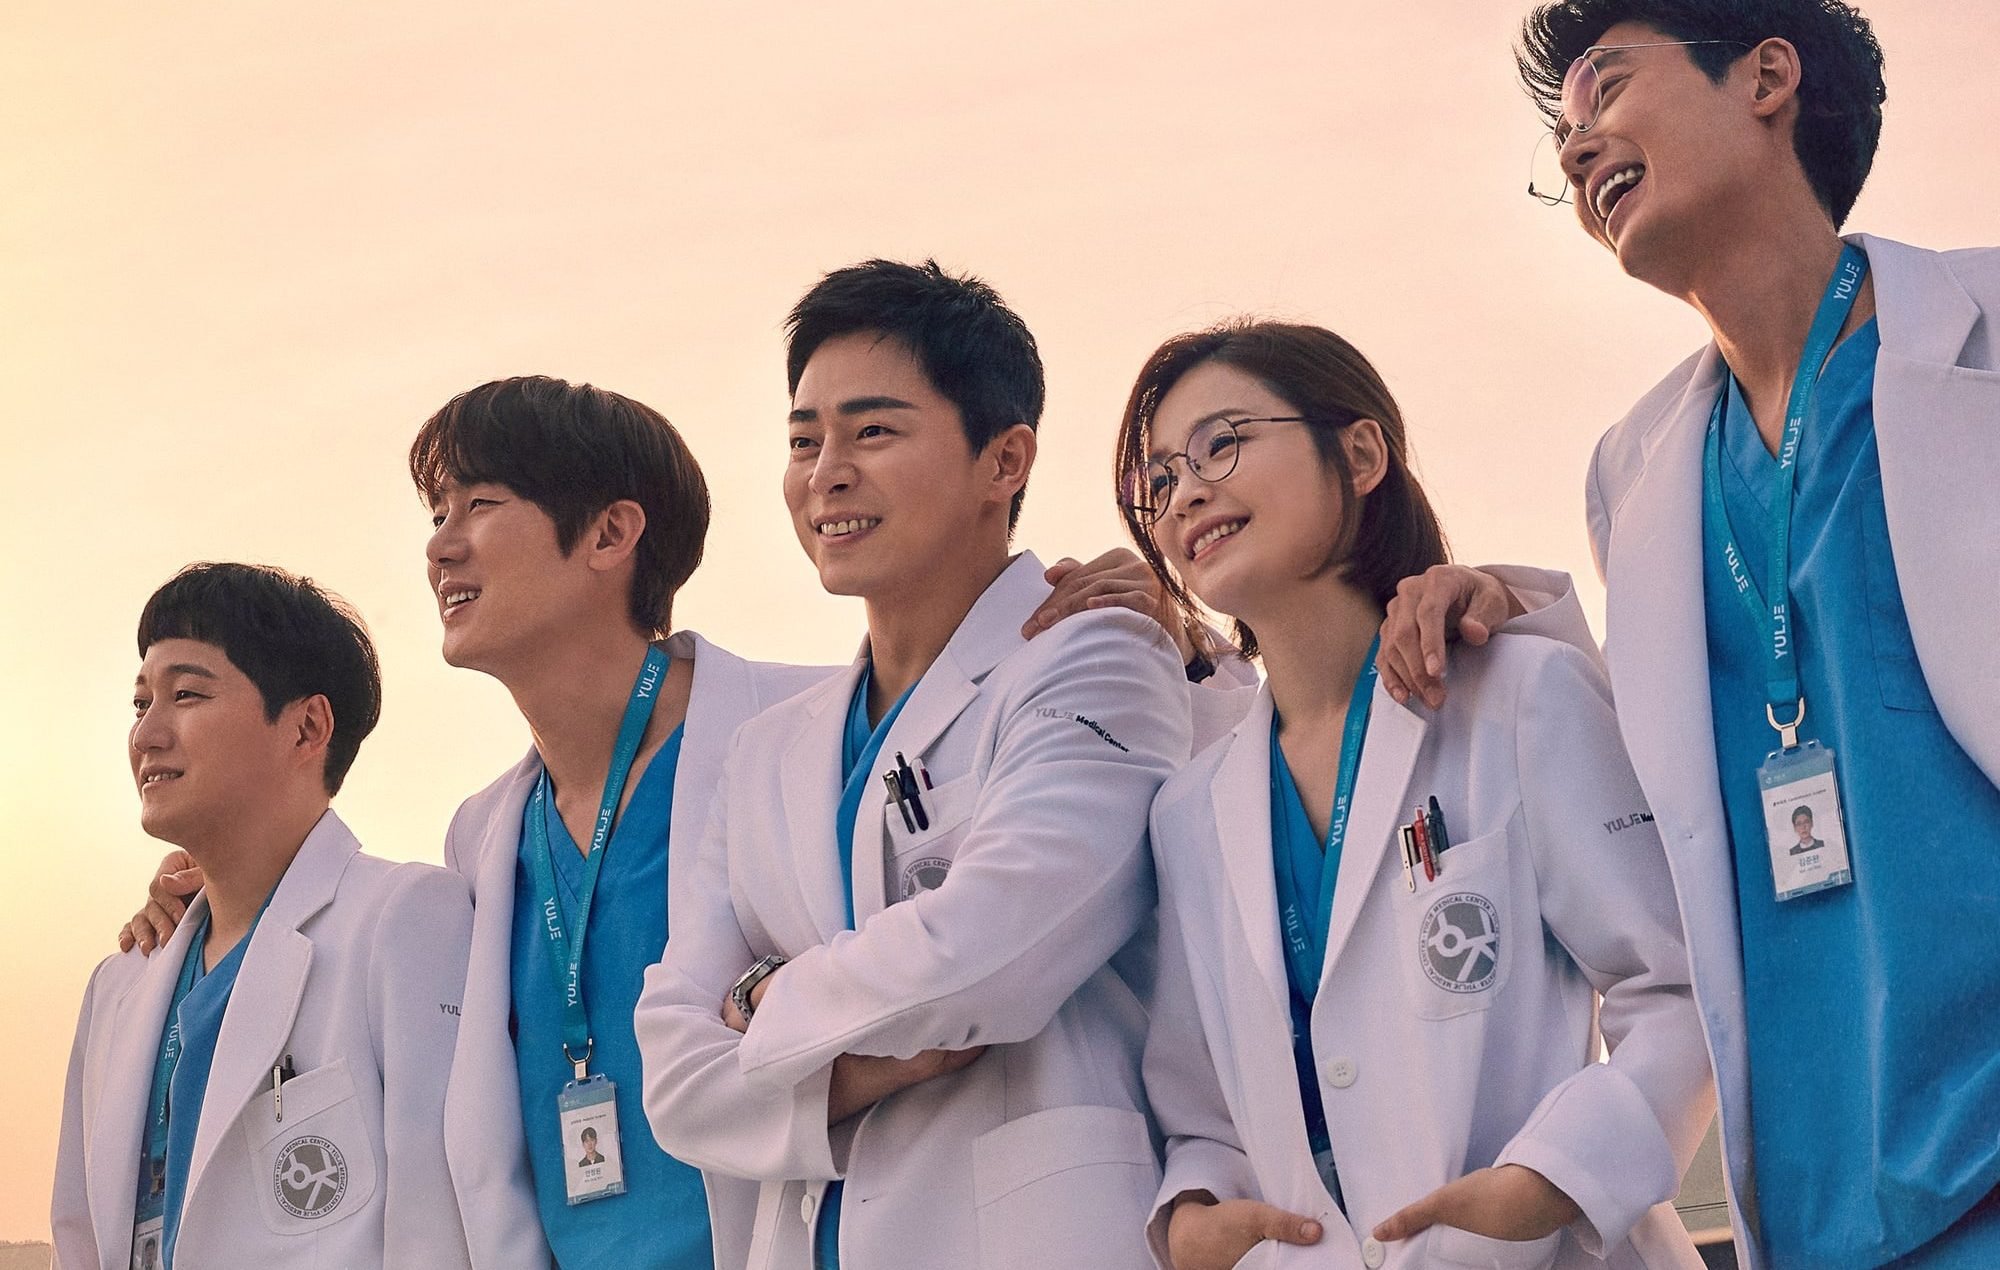 Main cast of 'Hospital Playlist 2' outside wearing medical scrubs